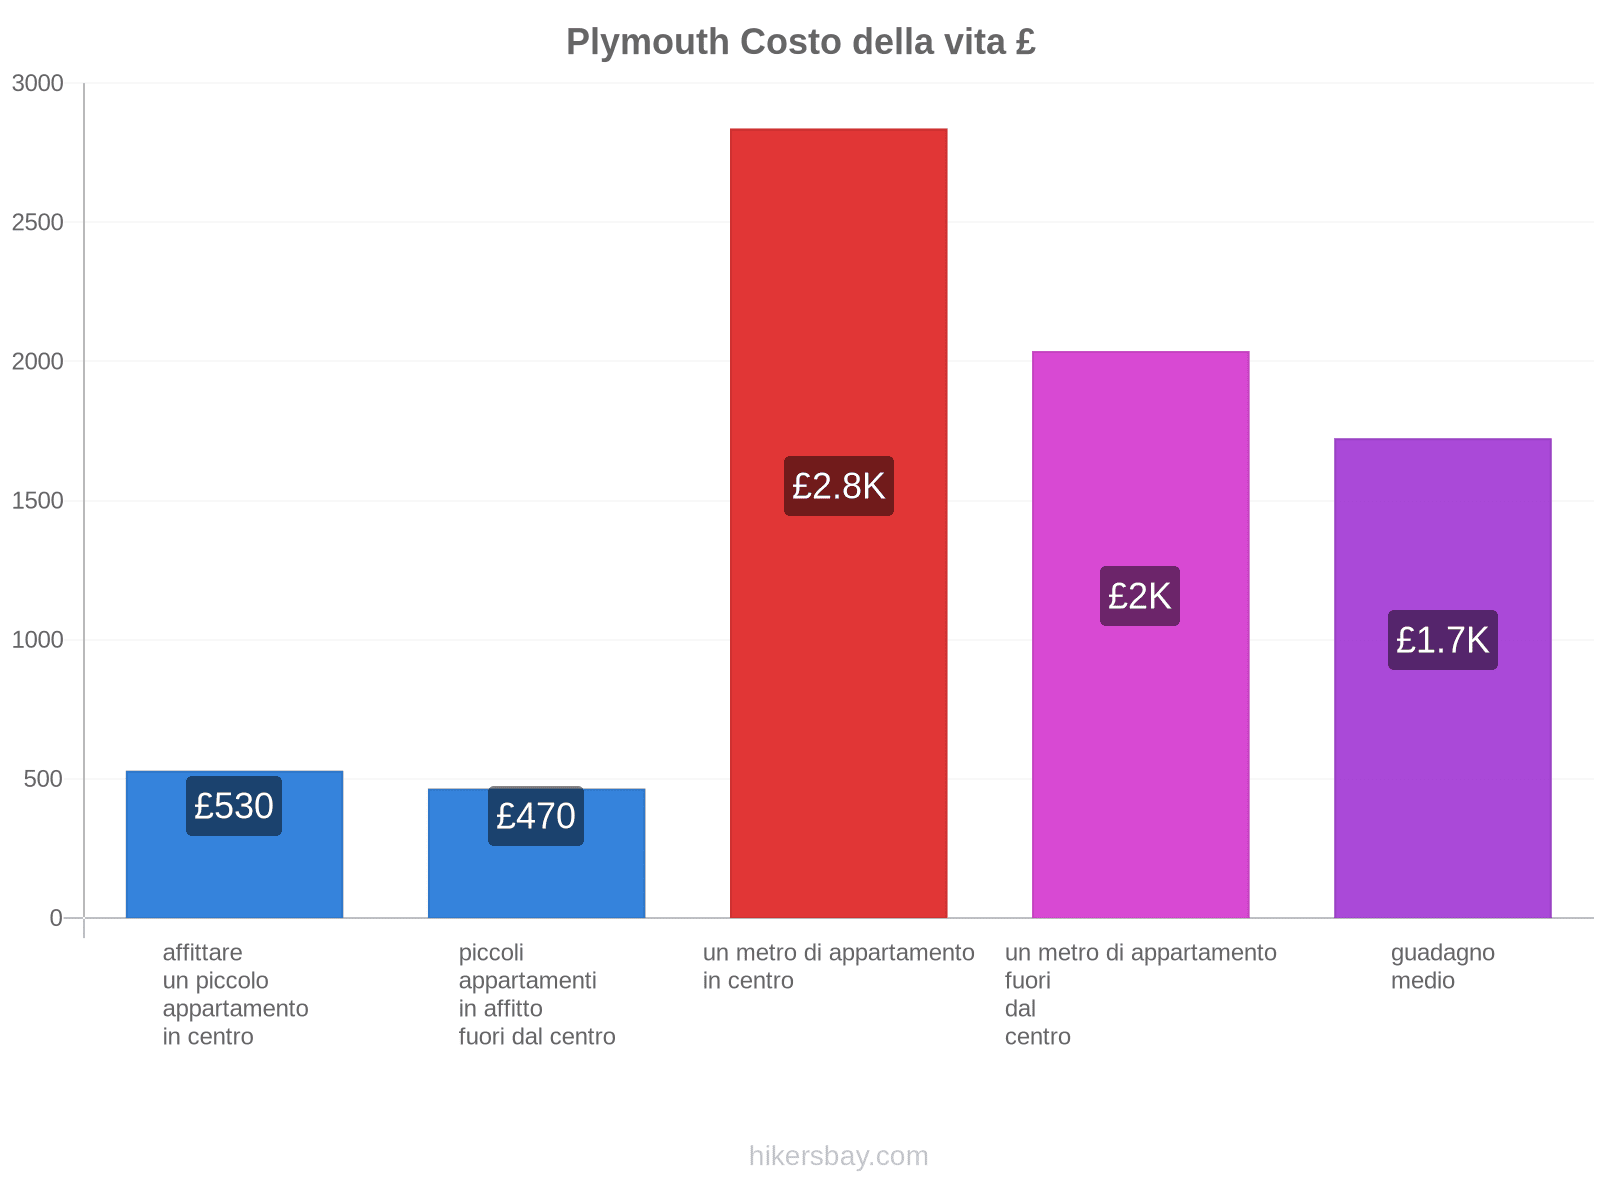 Plymouth costo della vita hikersbay.com